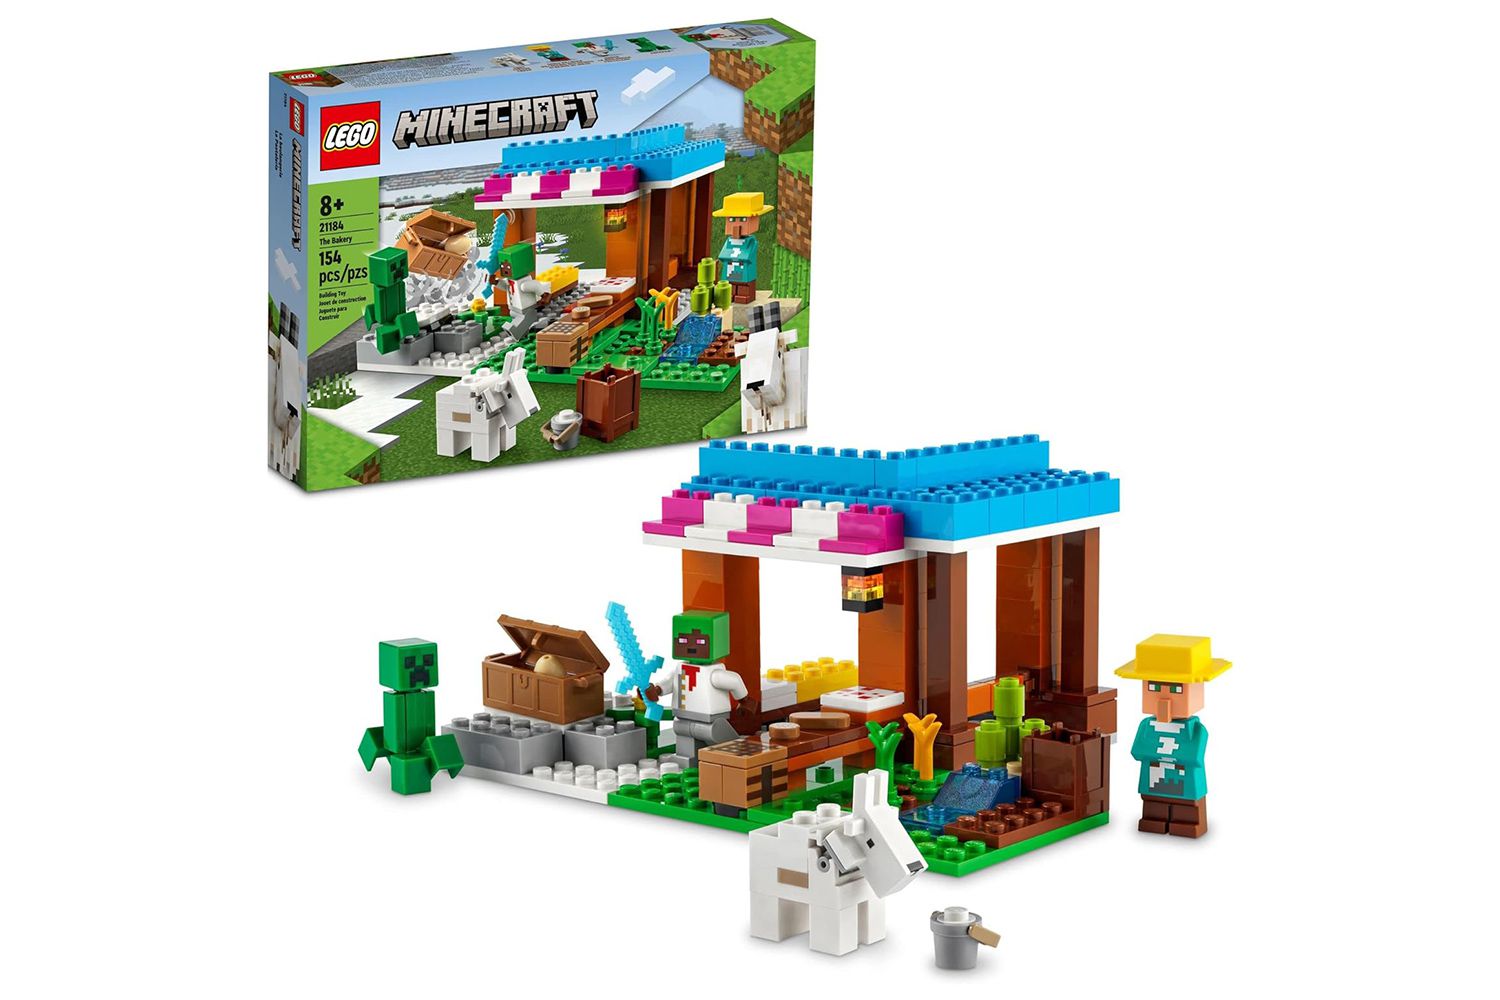 Cyber Monday Amazon LEGO Minecraft The Bakery Building Kit